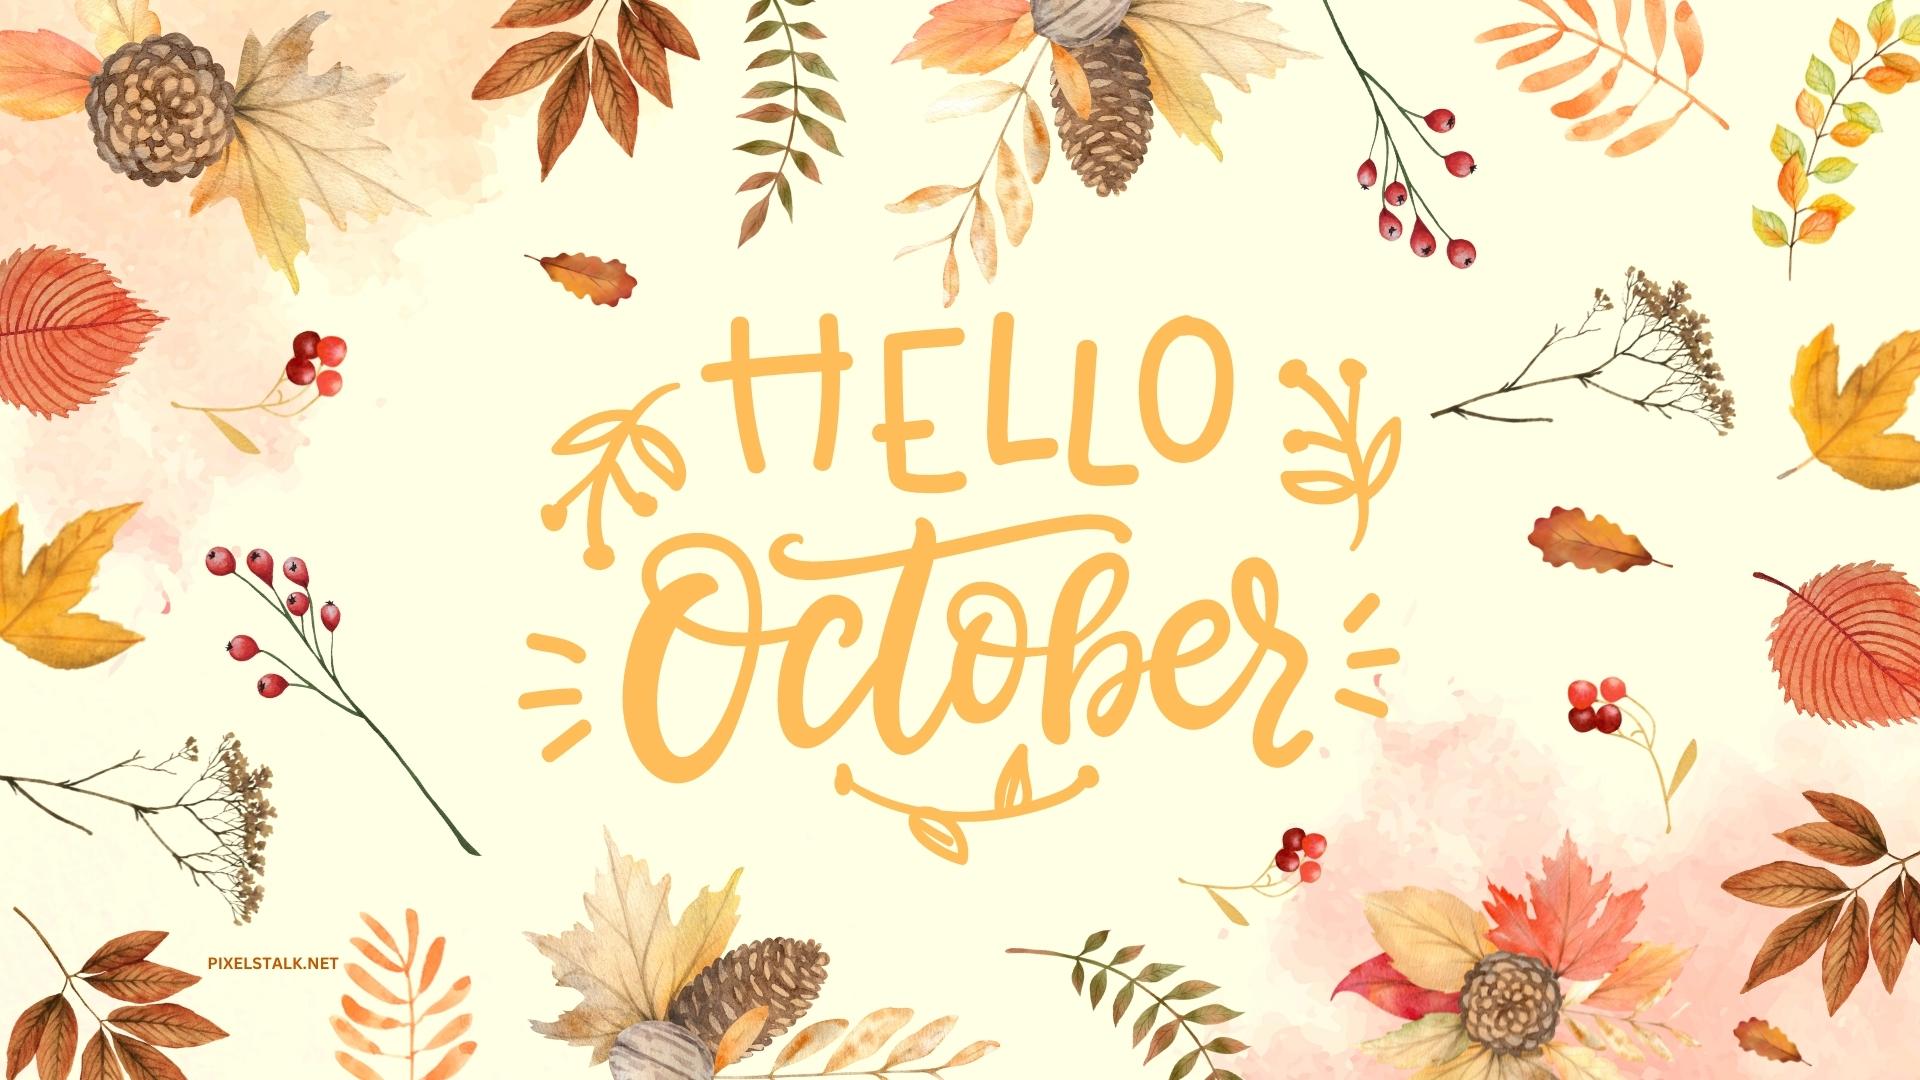 October wallpaper hd free for desktop